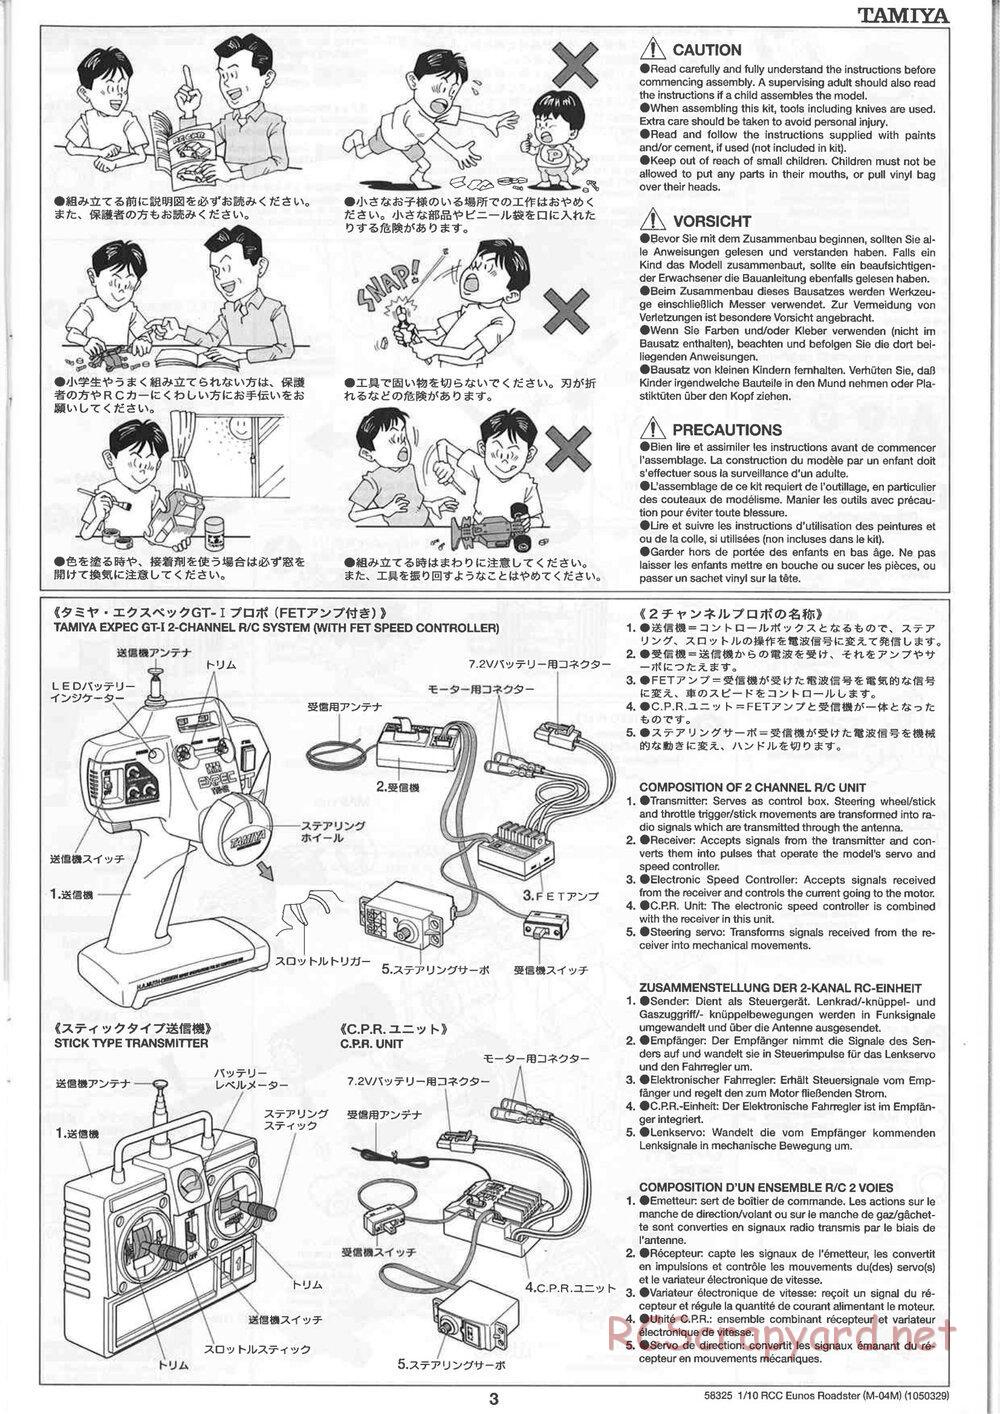 Tamiya - Eunos Roadster - M04M Chassis - Manual - Page 3